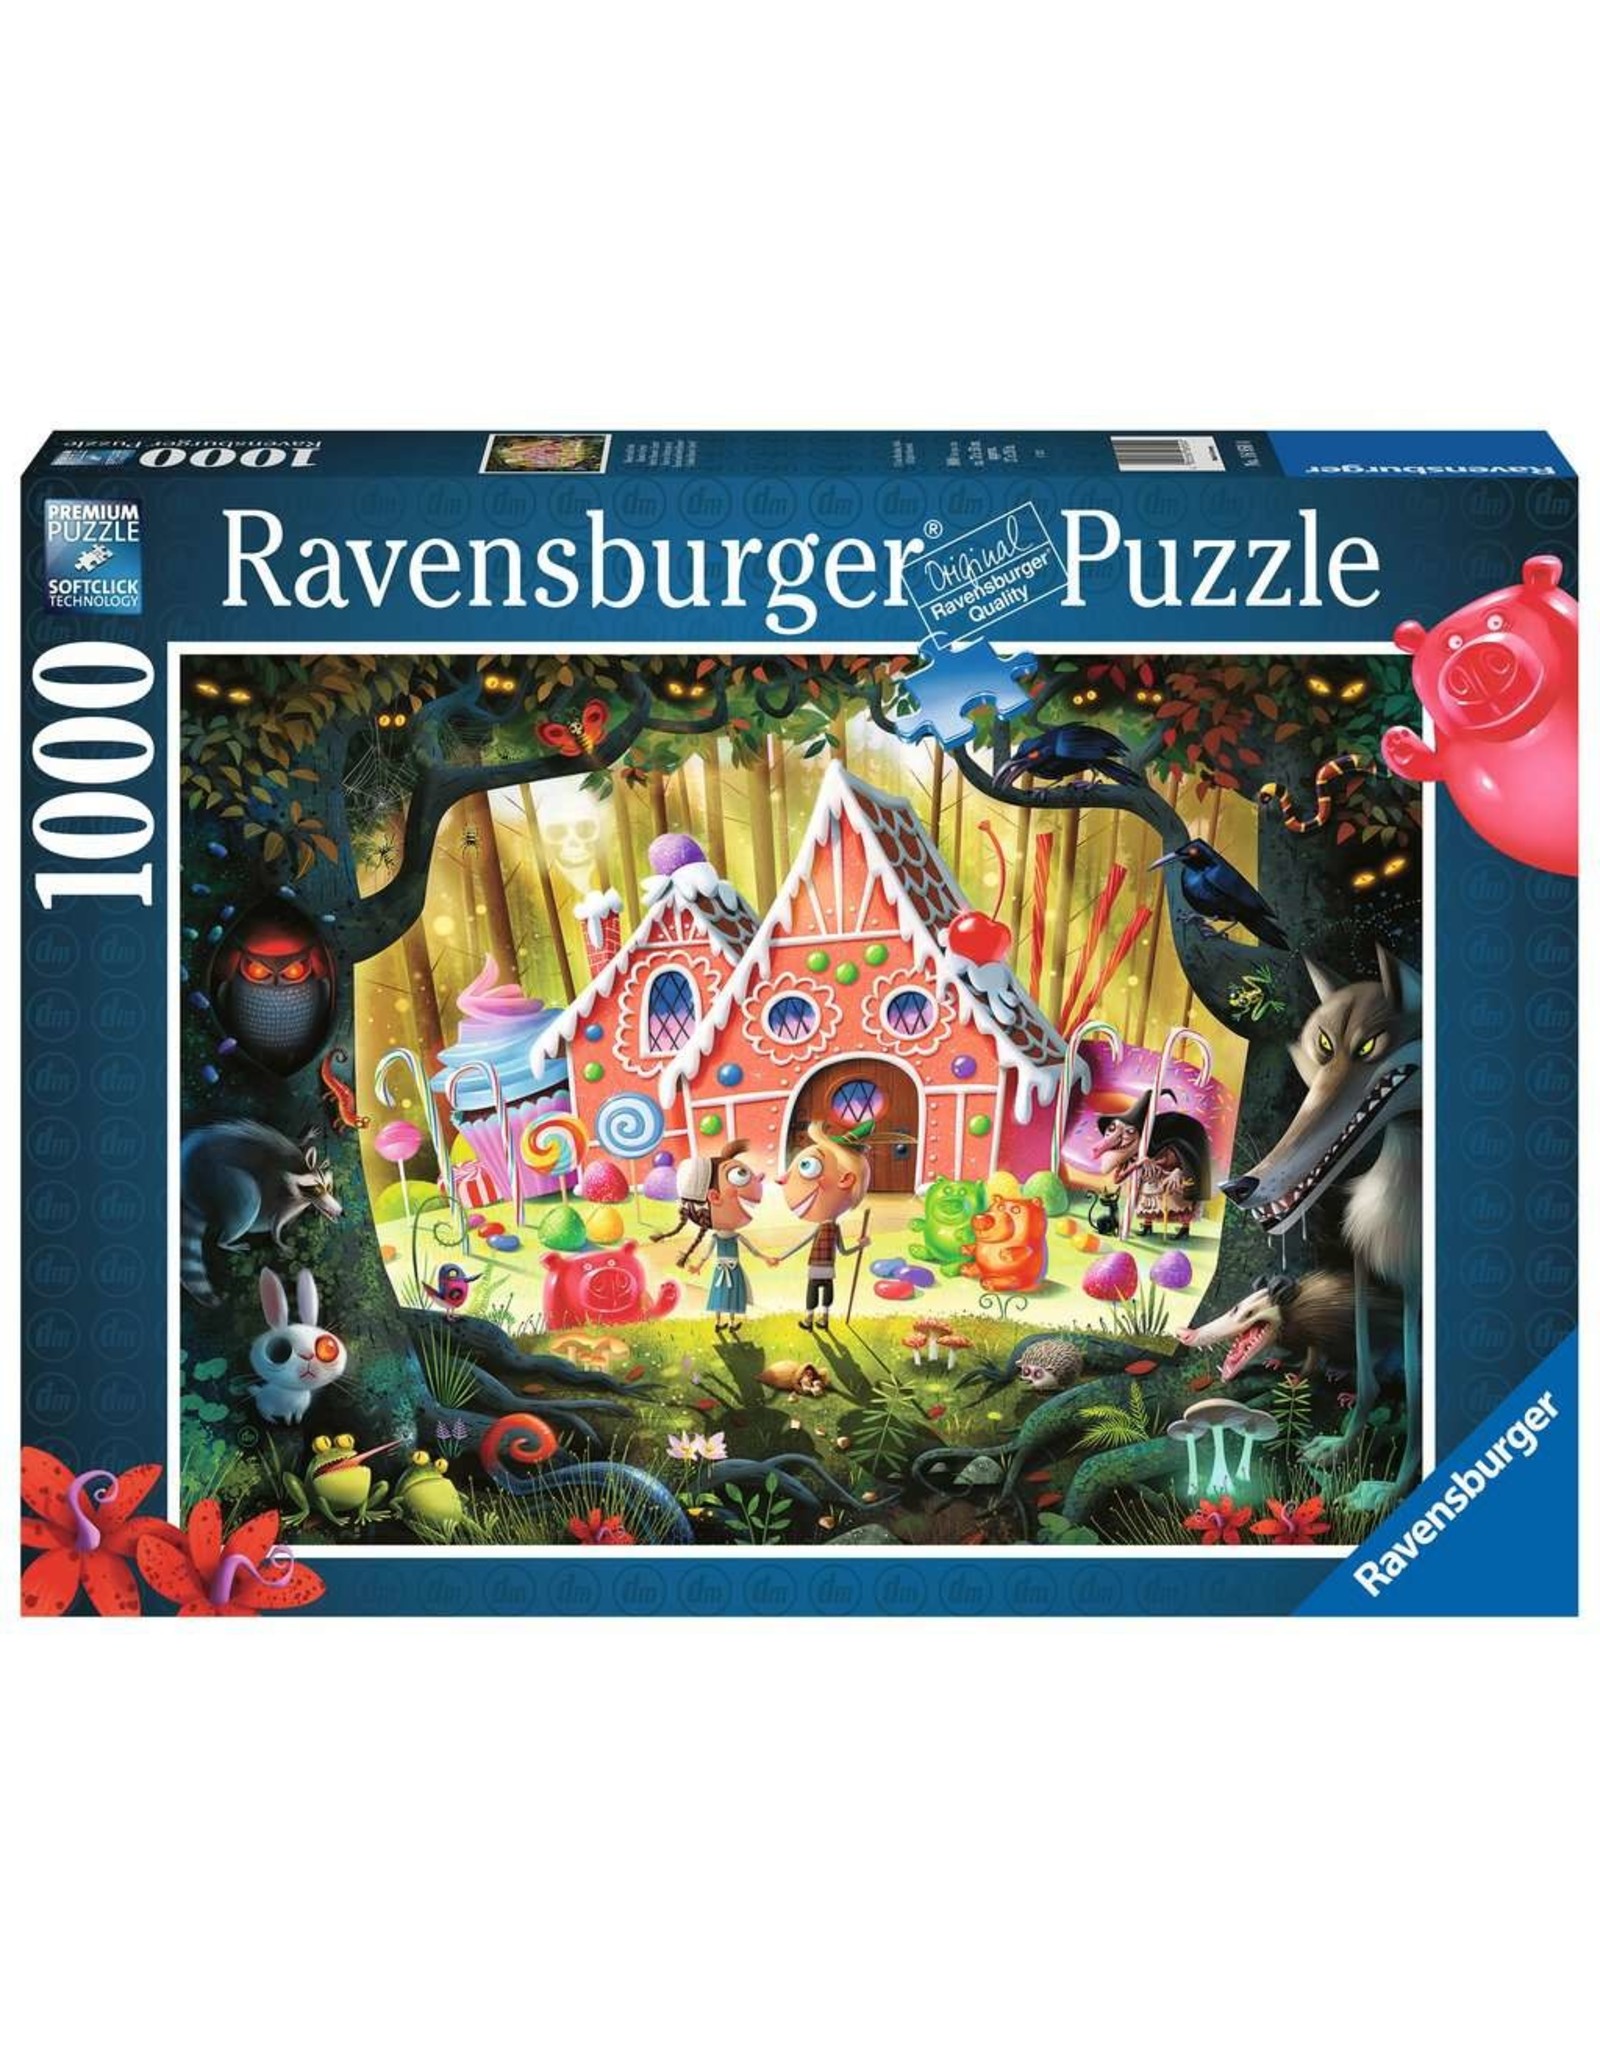 Ravensburger Puzzle Ravensburger 1000 pcs - Hansel et Gretel